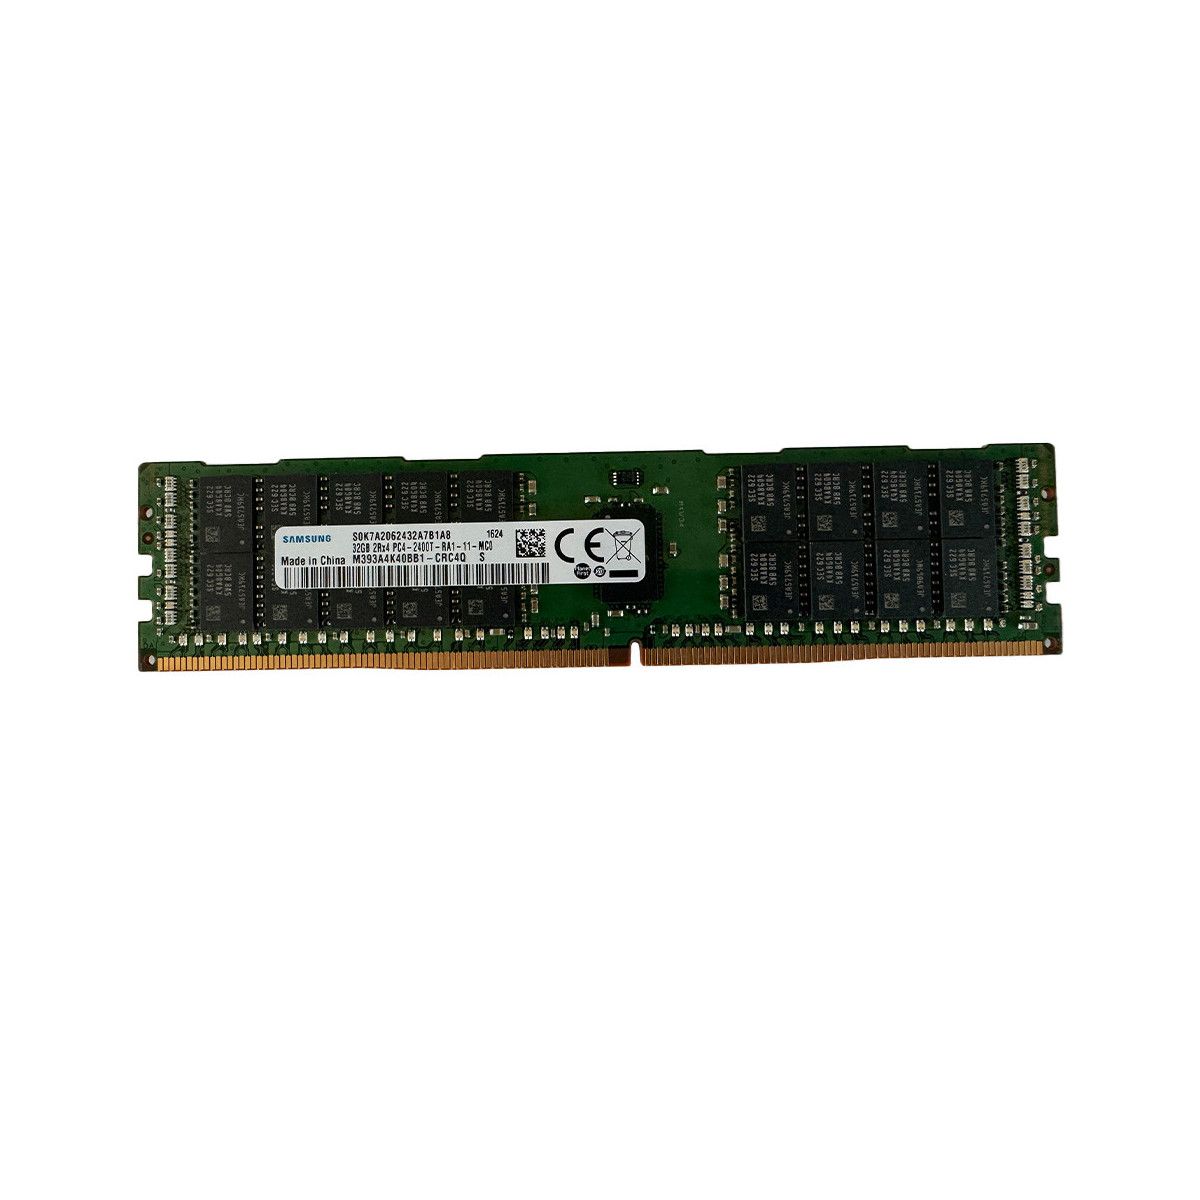 A8711888-MS - Memstar 1x 32GB DDR4-2400 RDIMM PC4-19200T-R - Mem-Star Compatible OEM Memory 1 - Memstar 